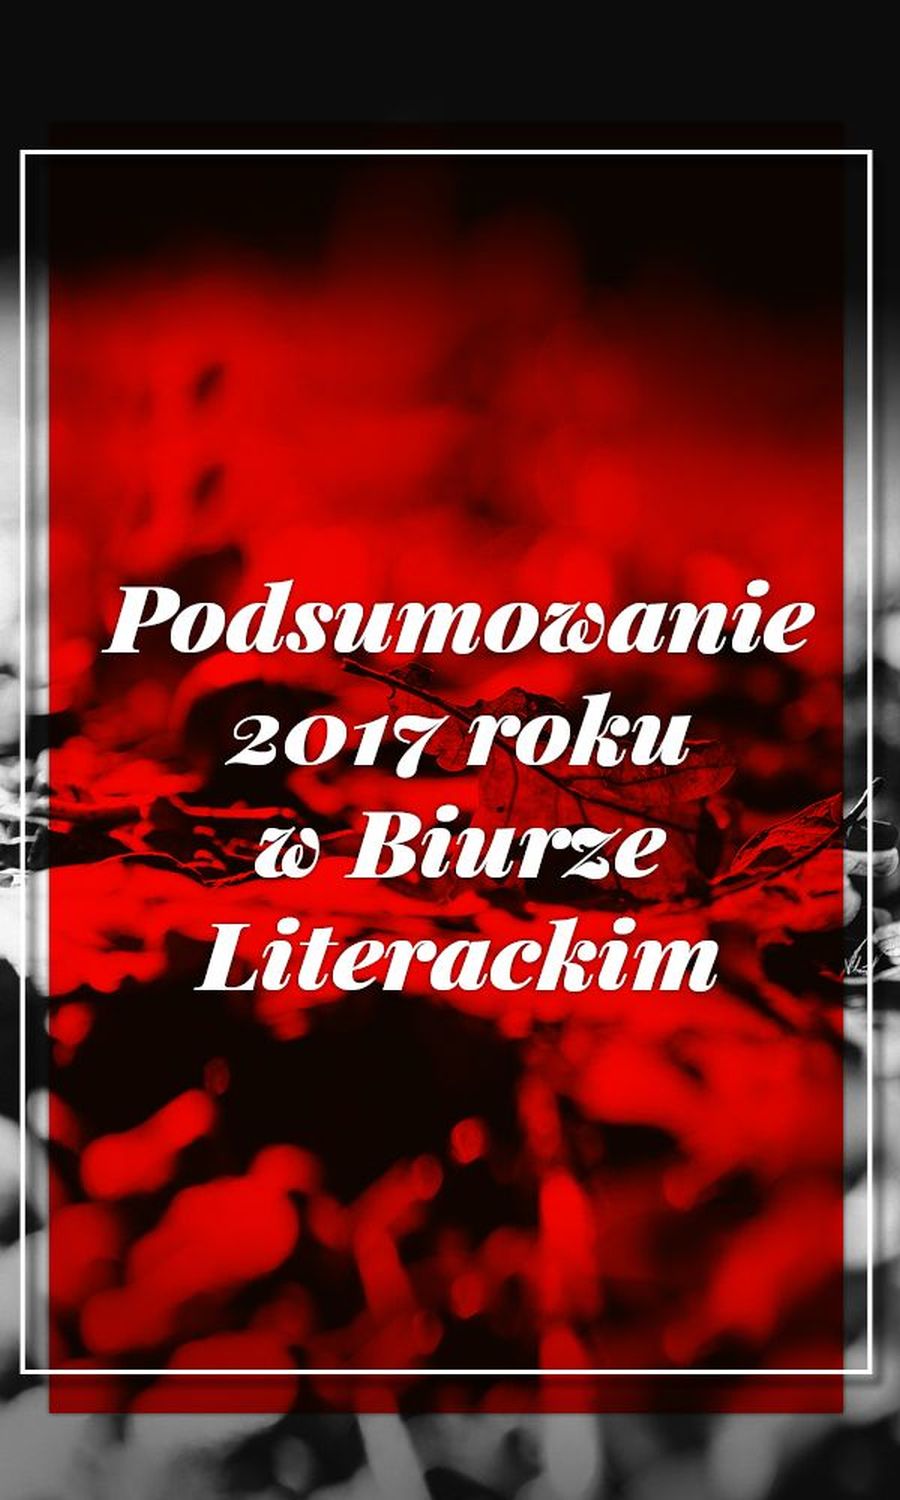 Biuro Literackie 2017 